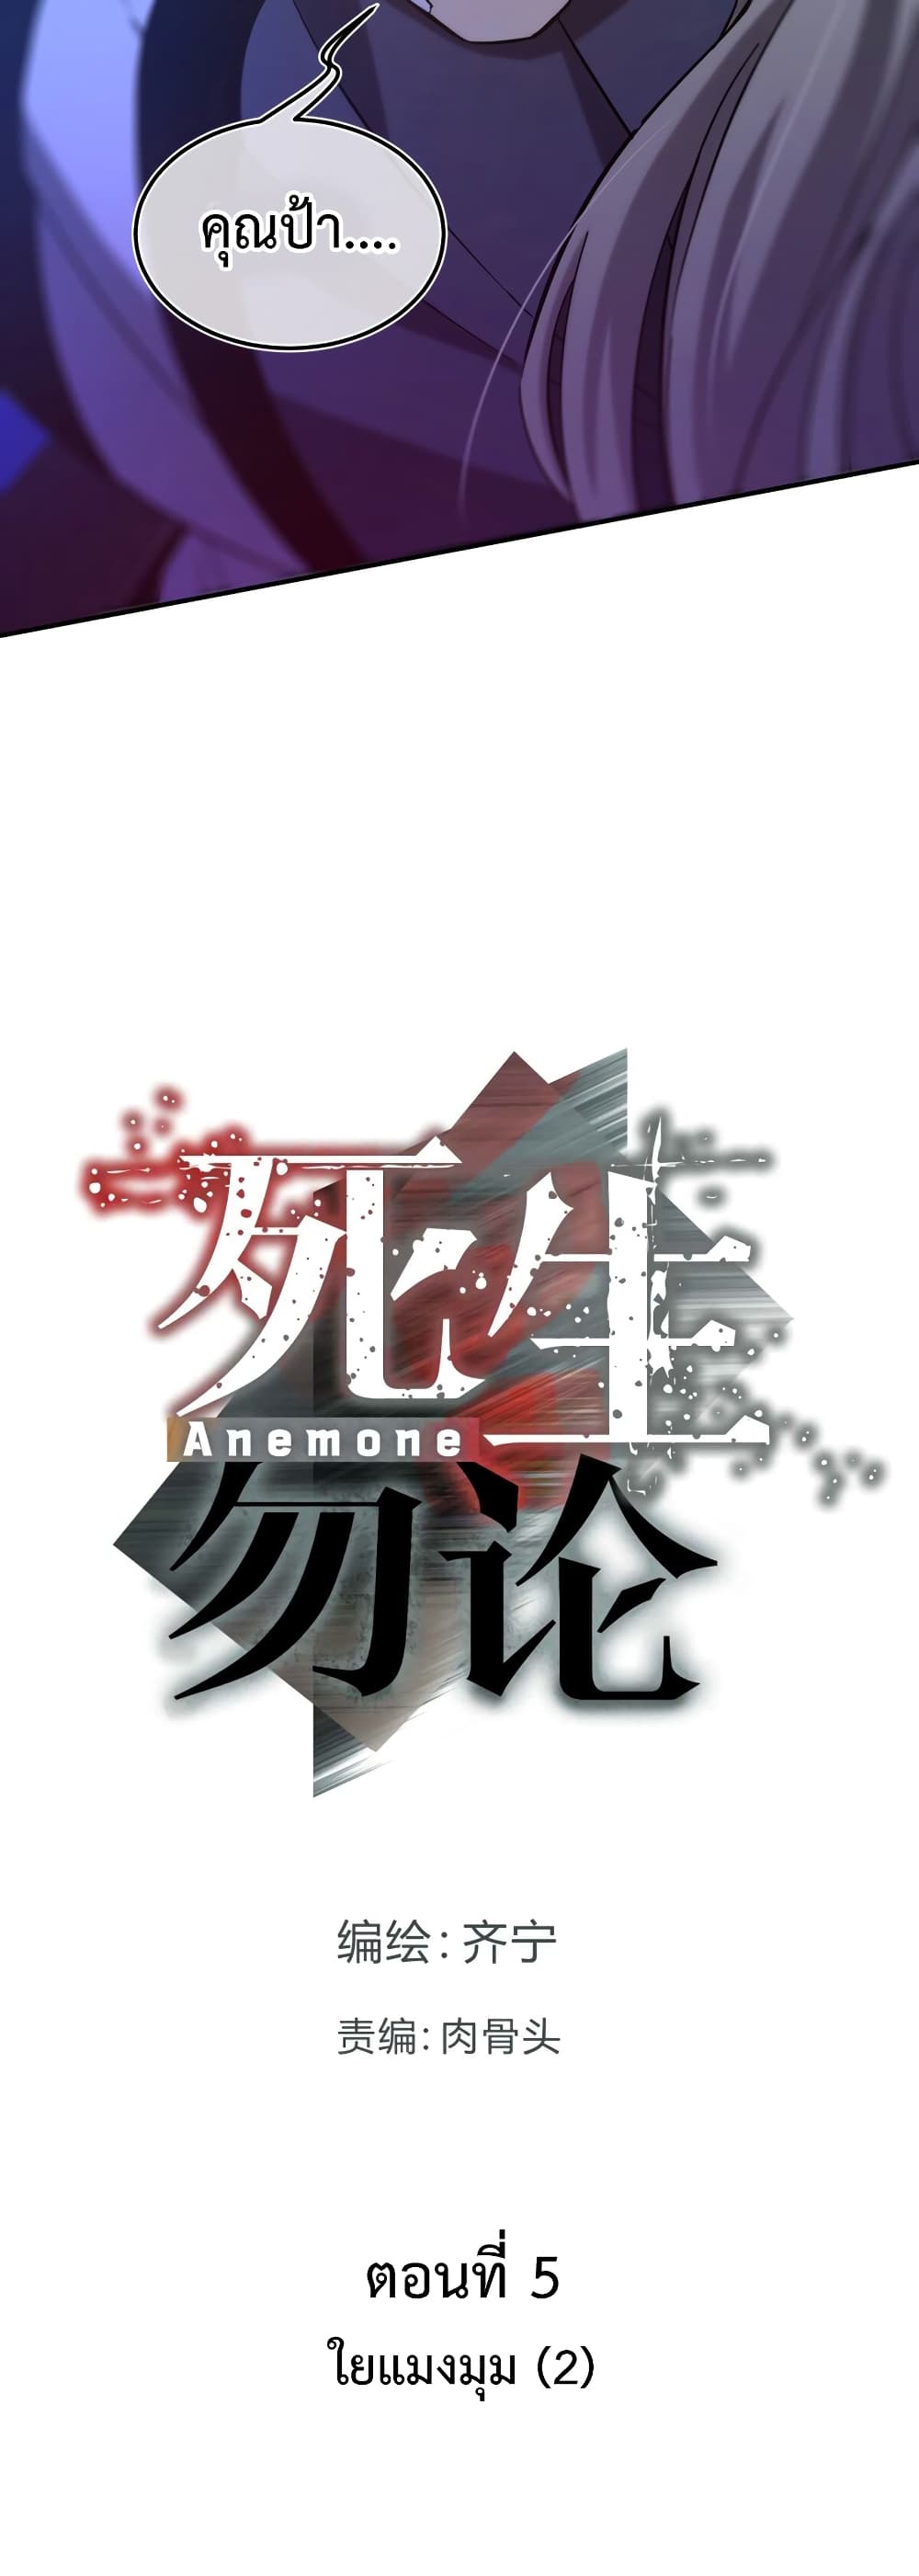 Anemone : Dead or Alive 5-5